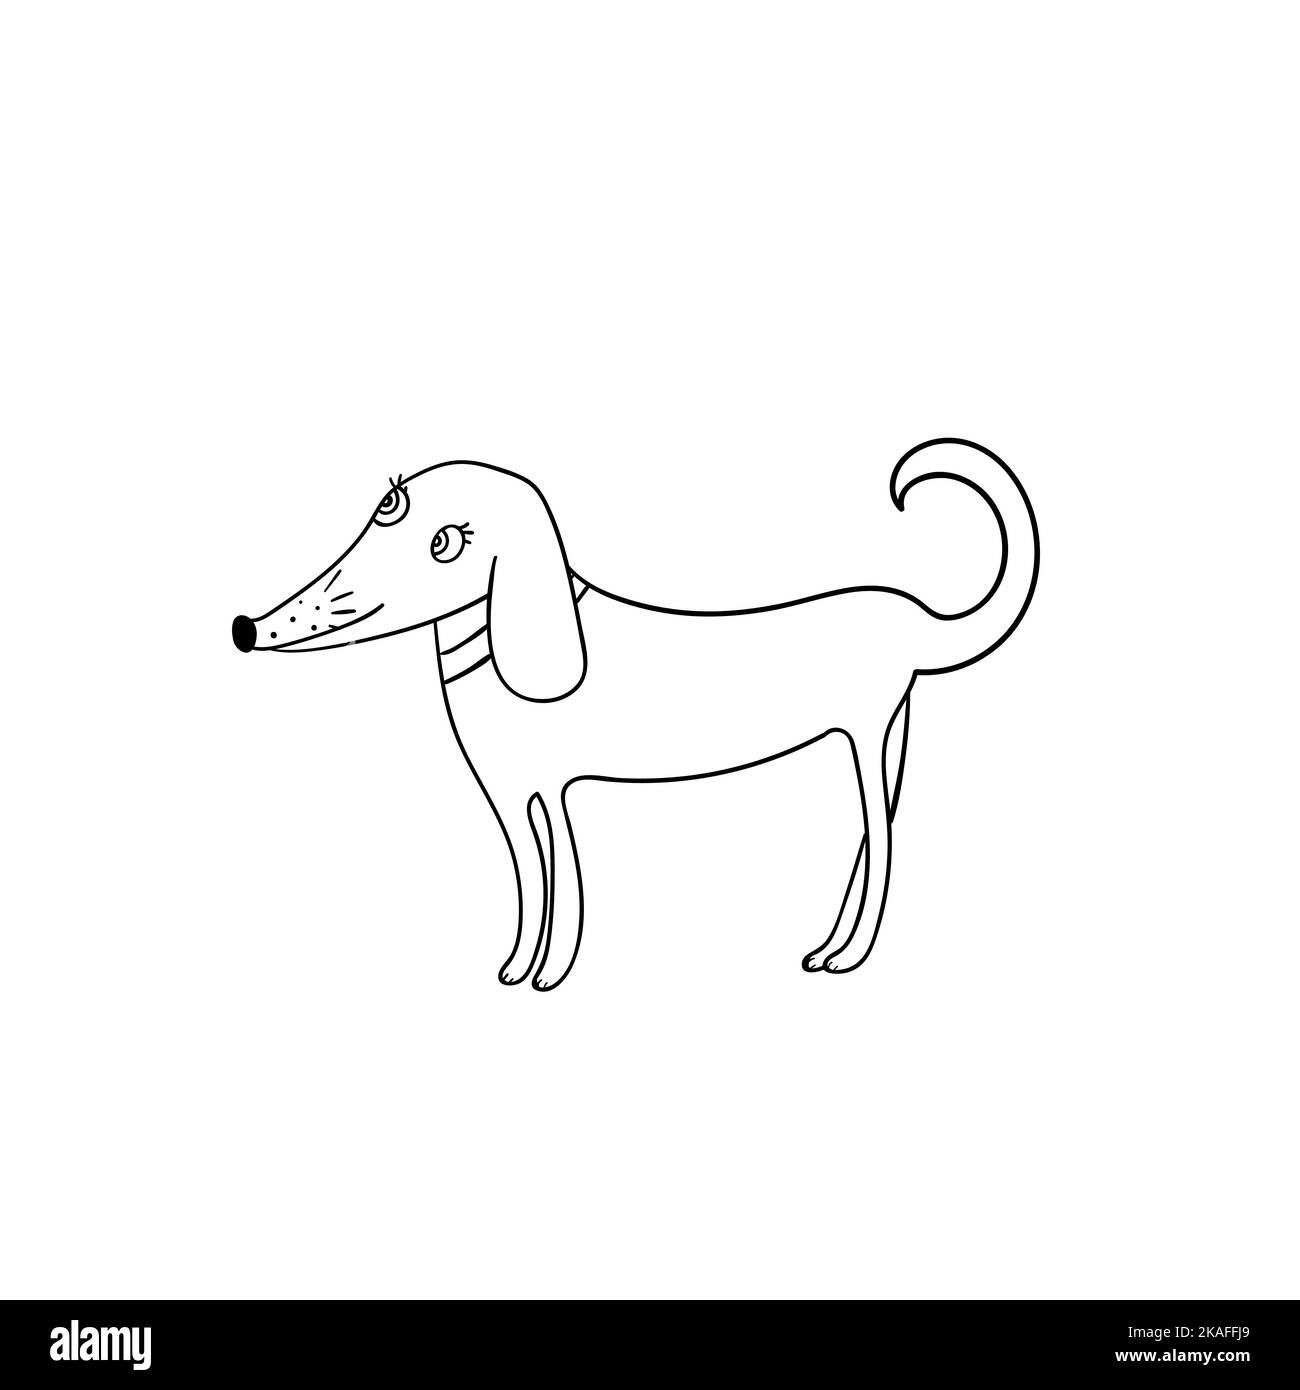 Vector illustration of cute cartoon style dog Stock Vector